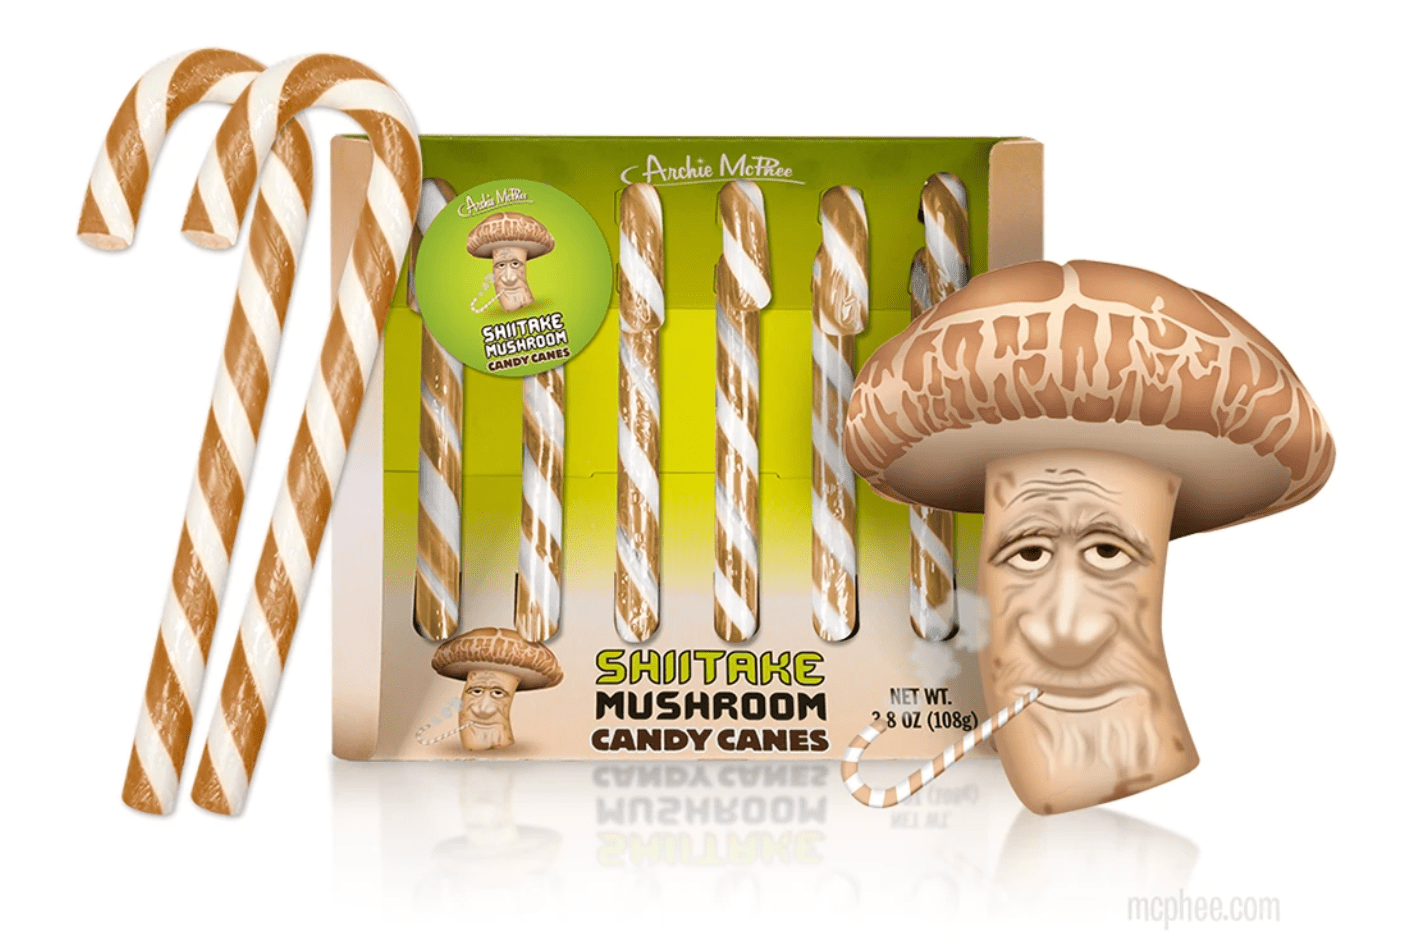 Archie McPhee Shiitake Mushroom Candy Cane box with mascot mushroom beside the box